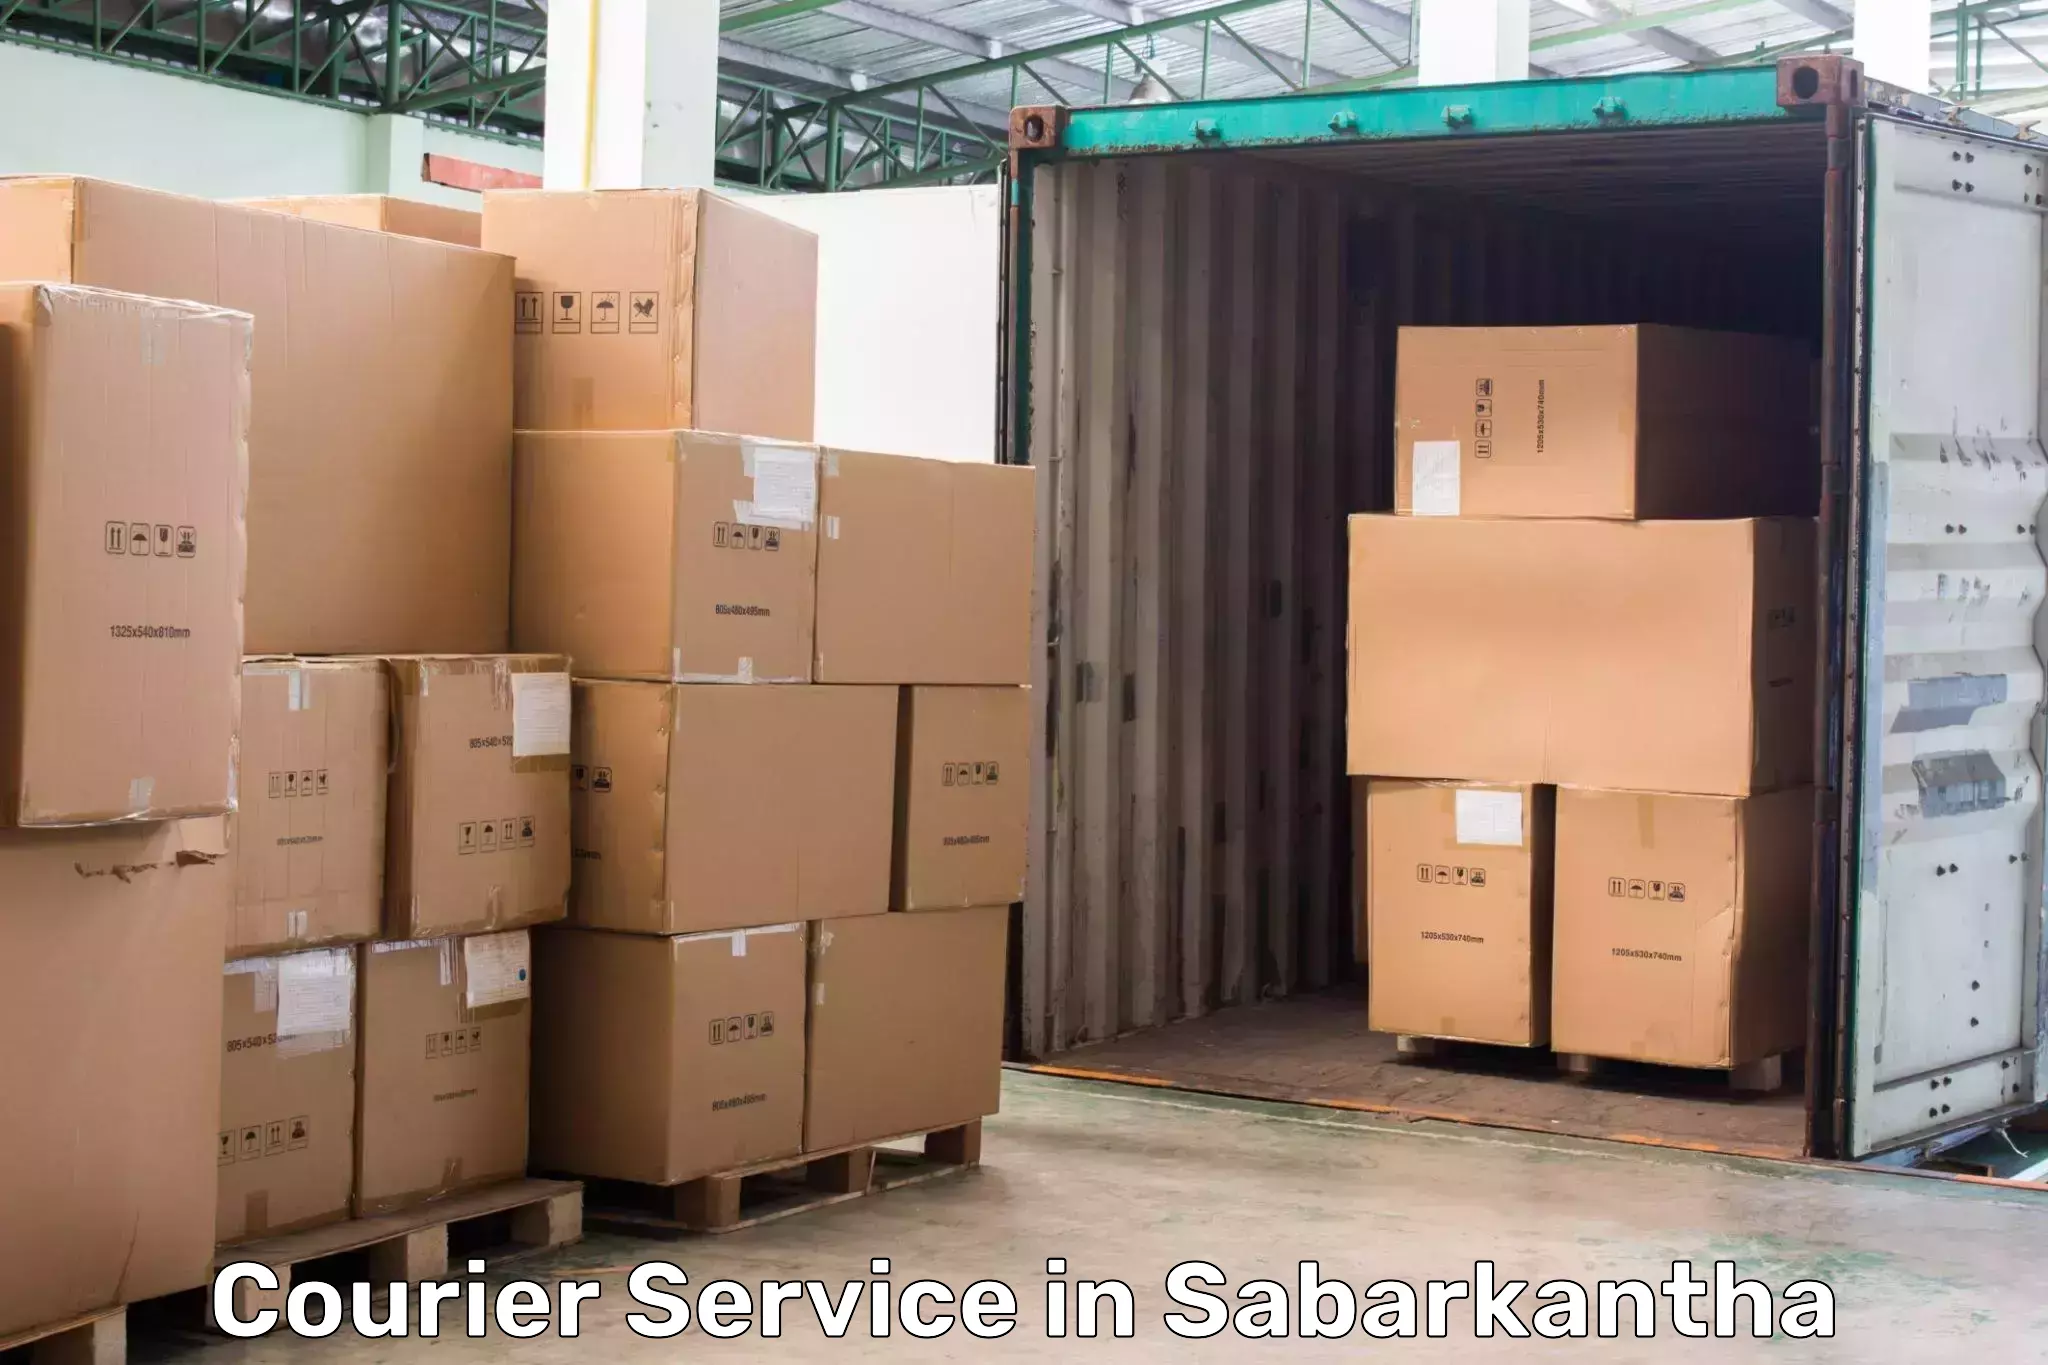 E-commerce fulfillment in Sabarkantha